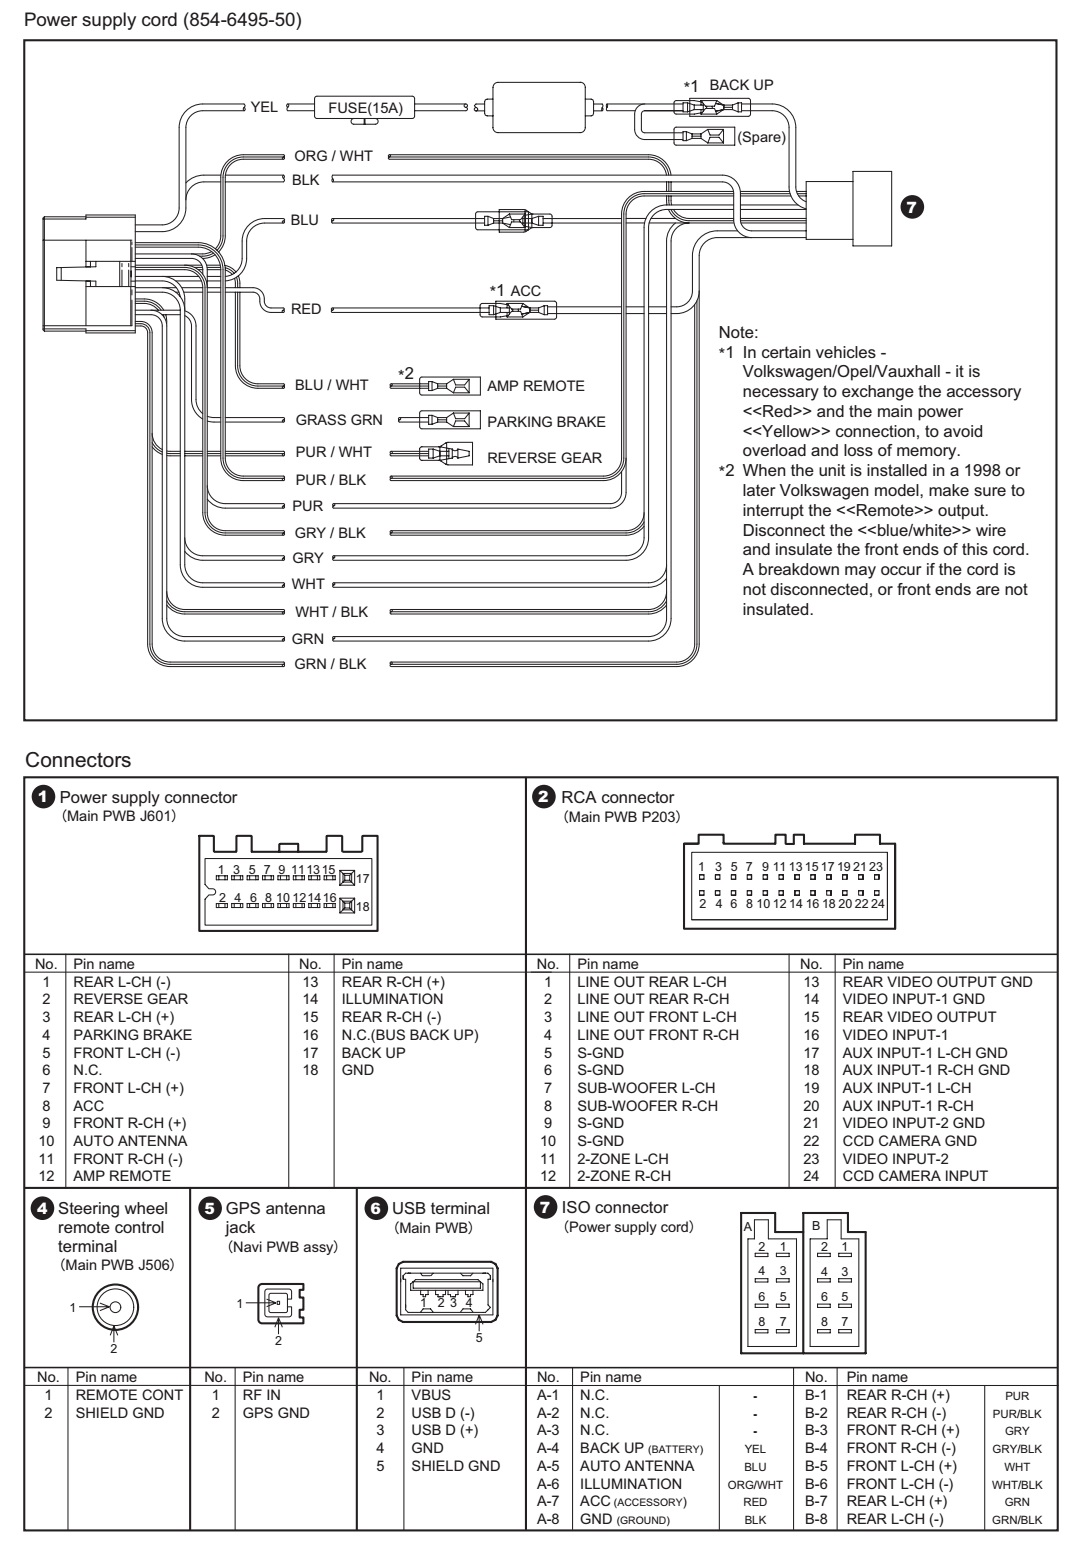 Clarion radio wiring diagram information